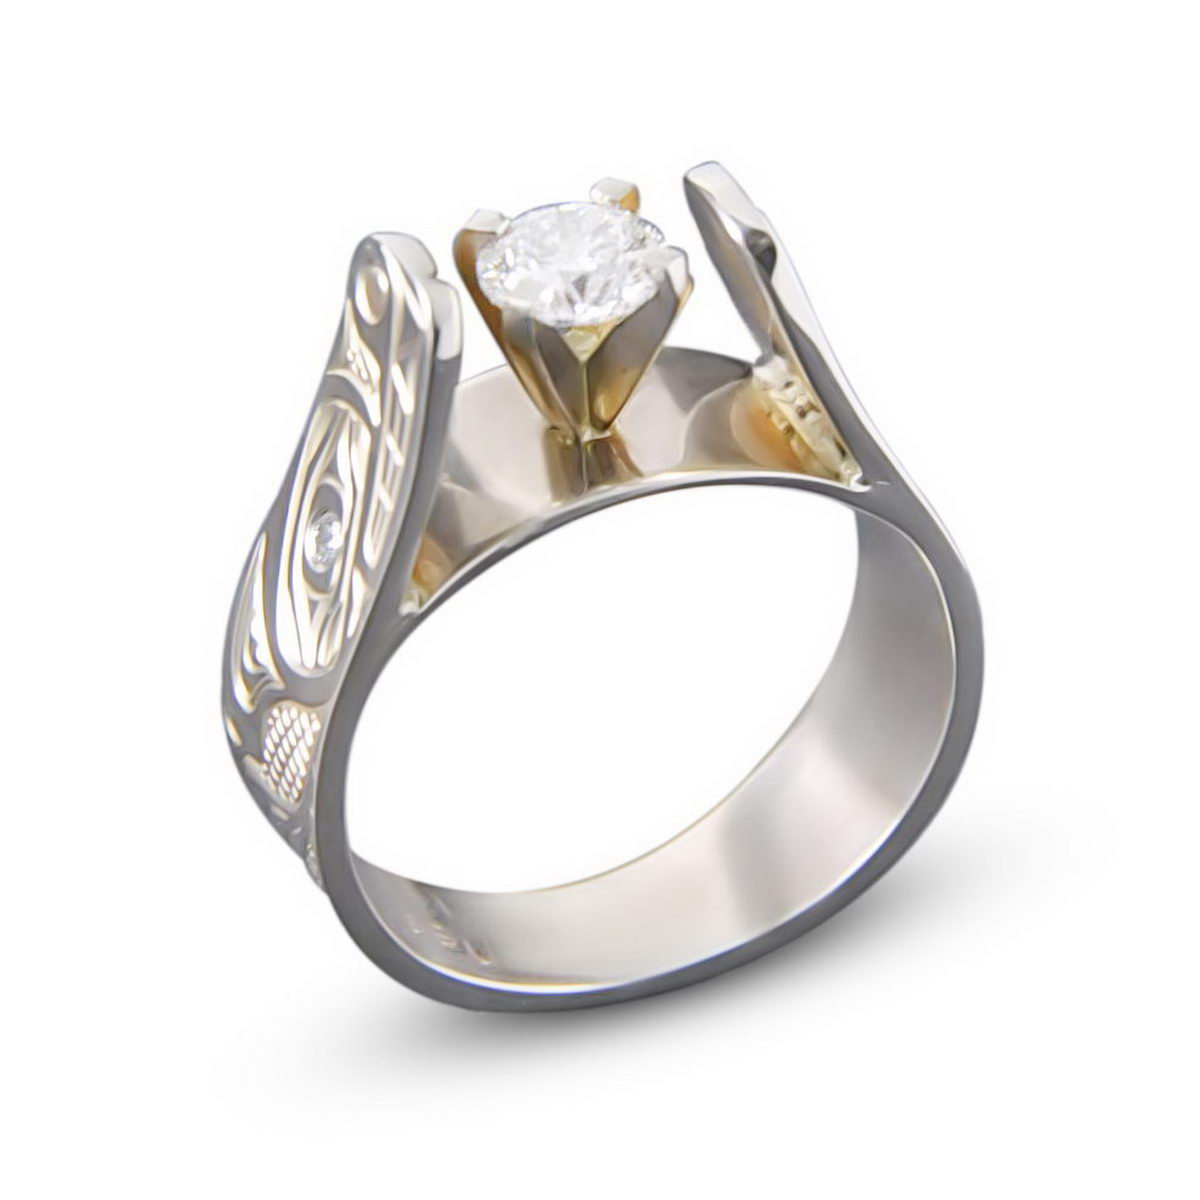 Bear Ring White Gold & Diamond